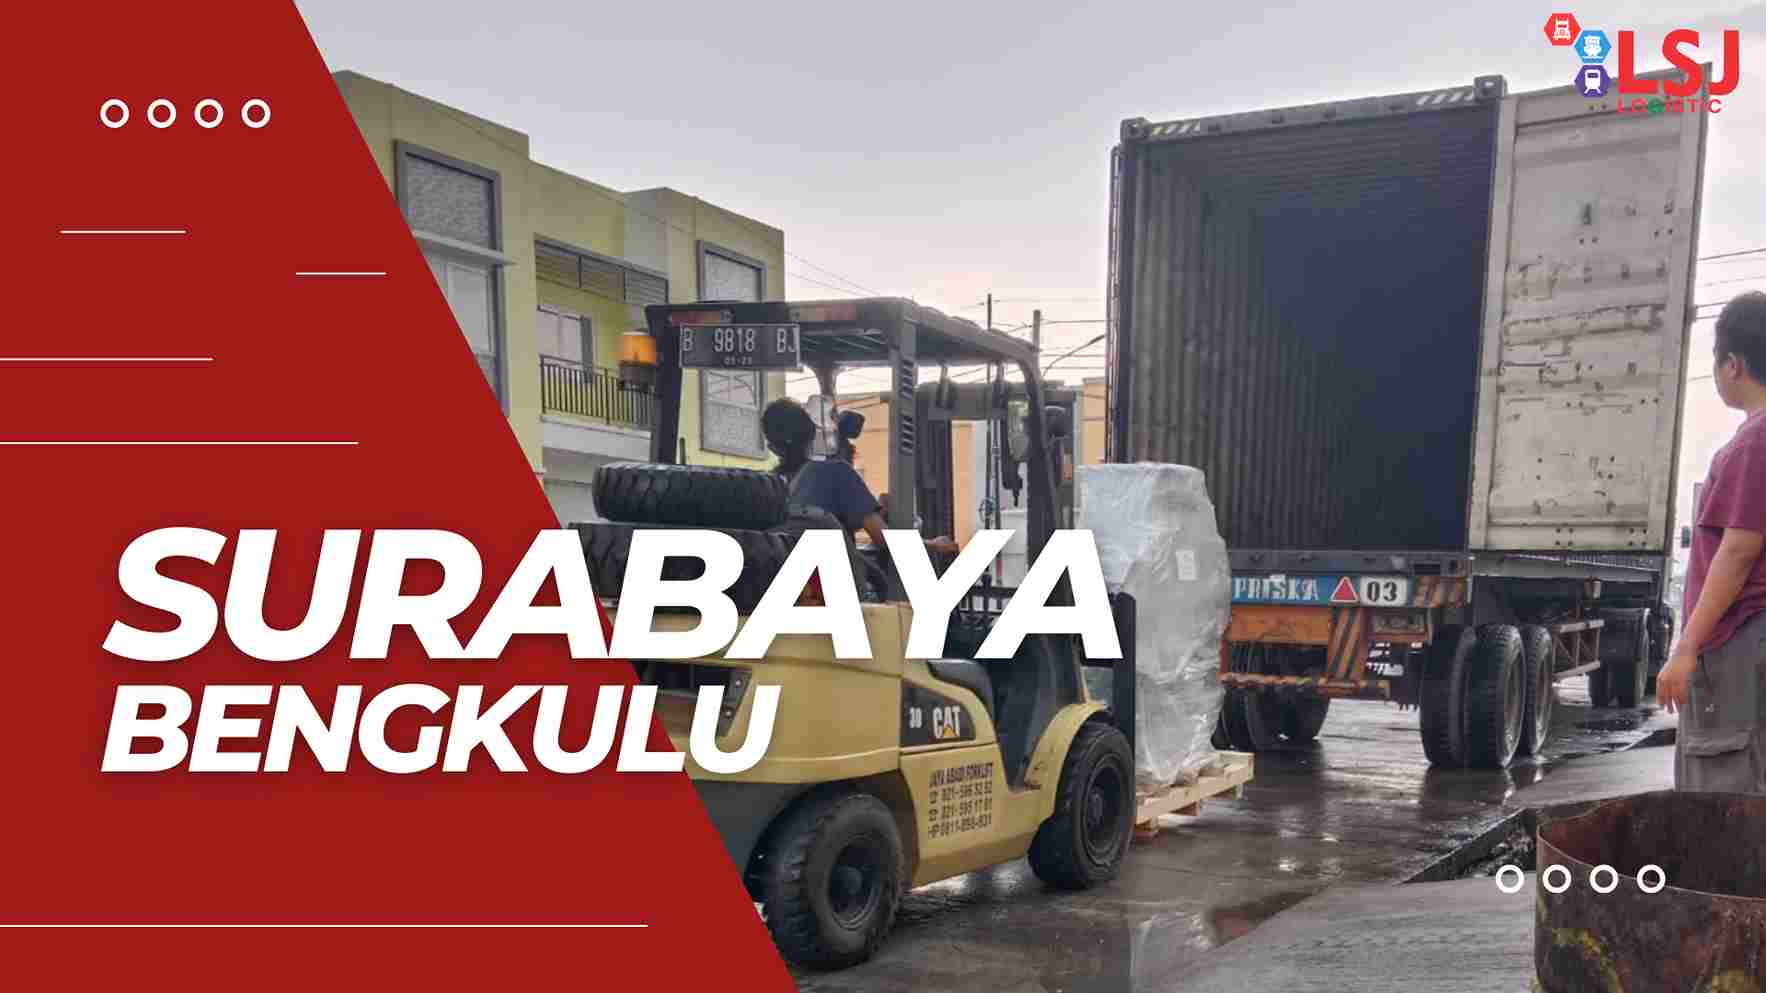 Ongkos Kirim Container Surabaya Bengkulu